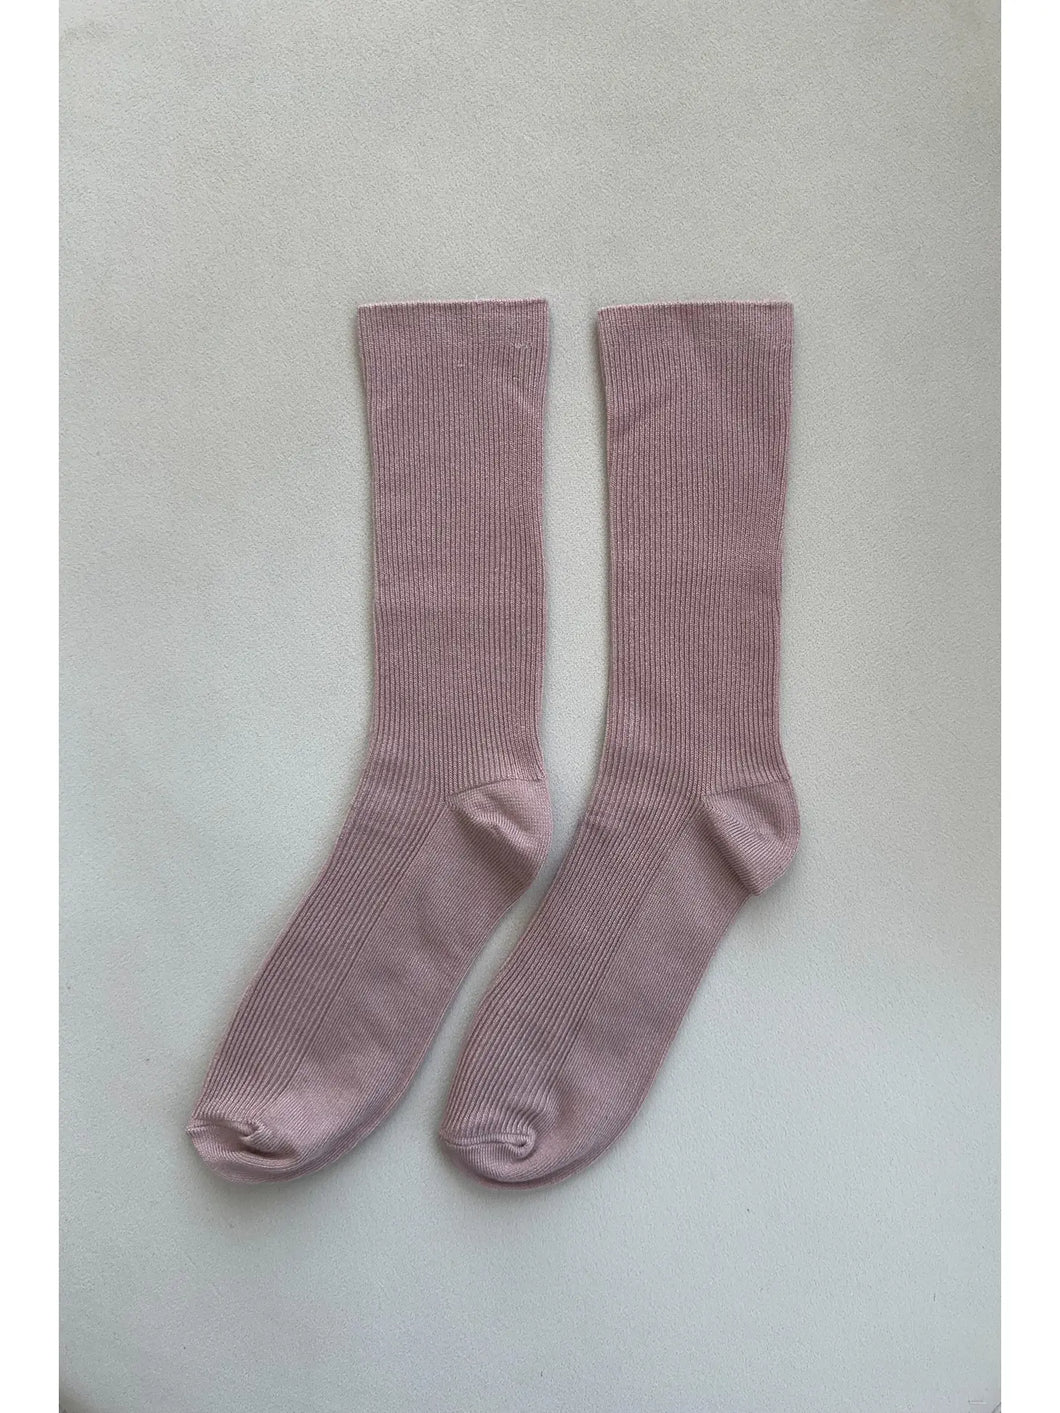 Trouser Socks - ROSEWATER